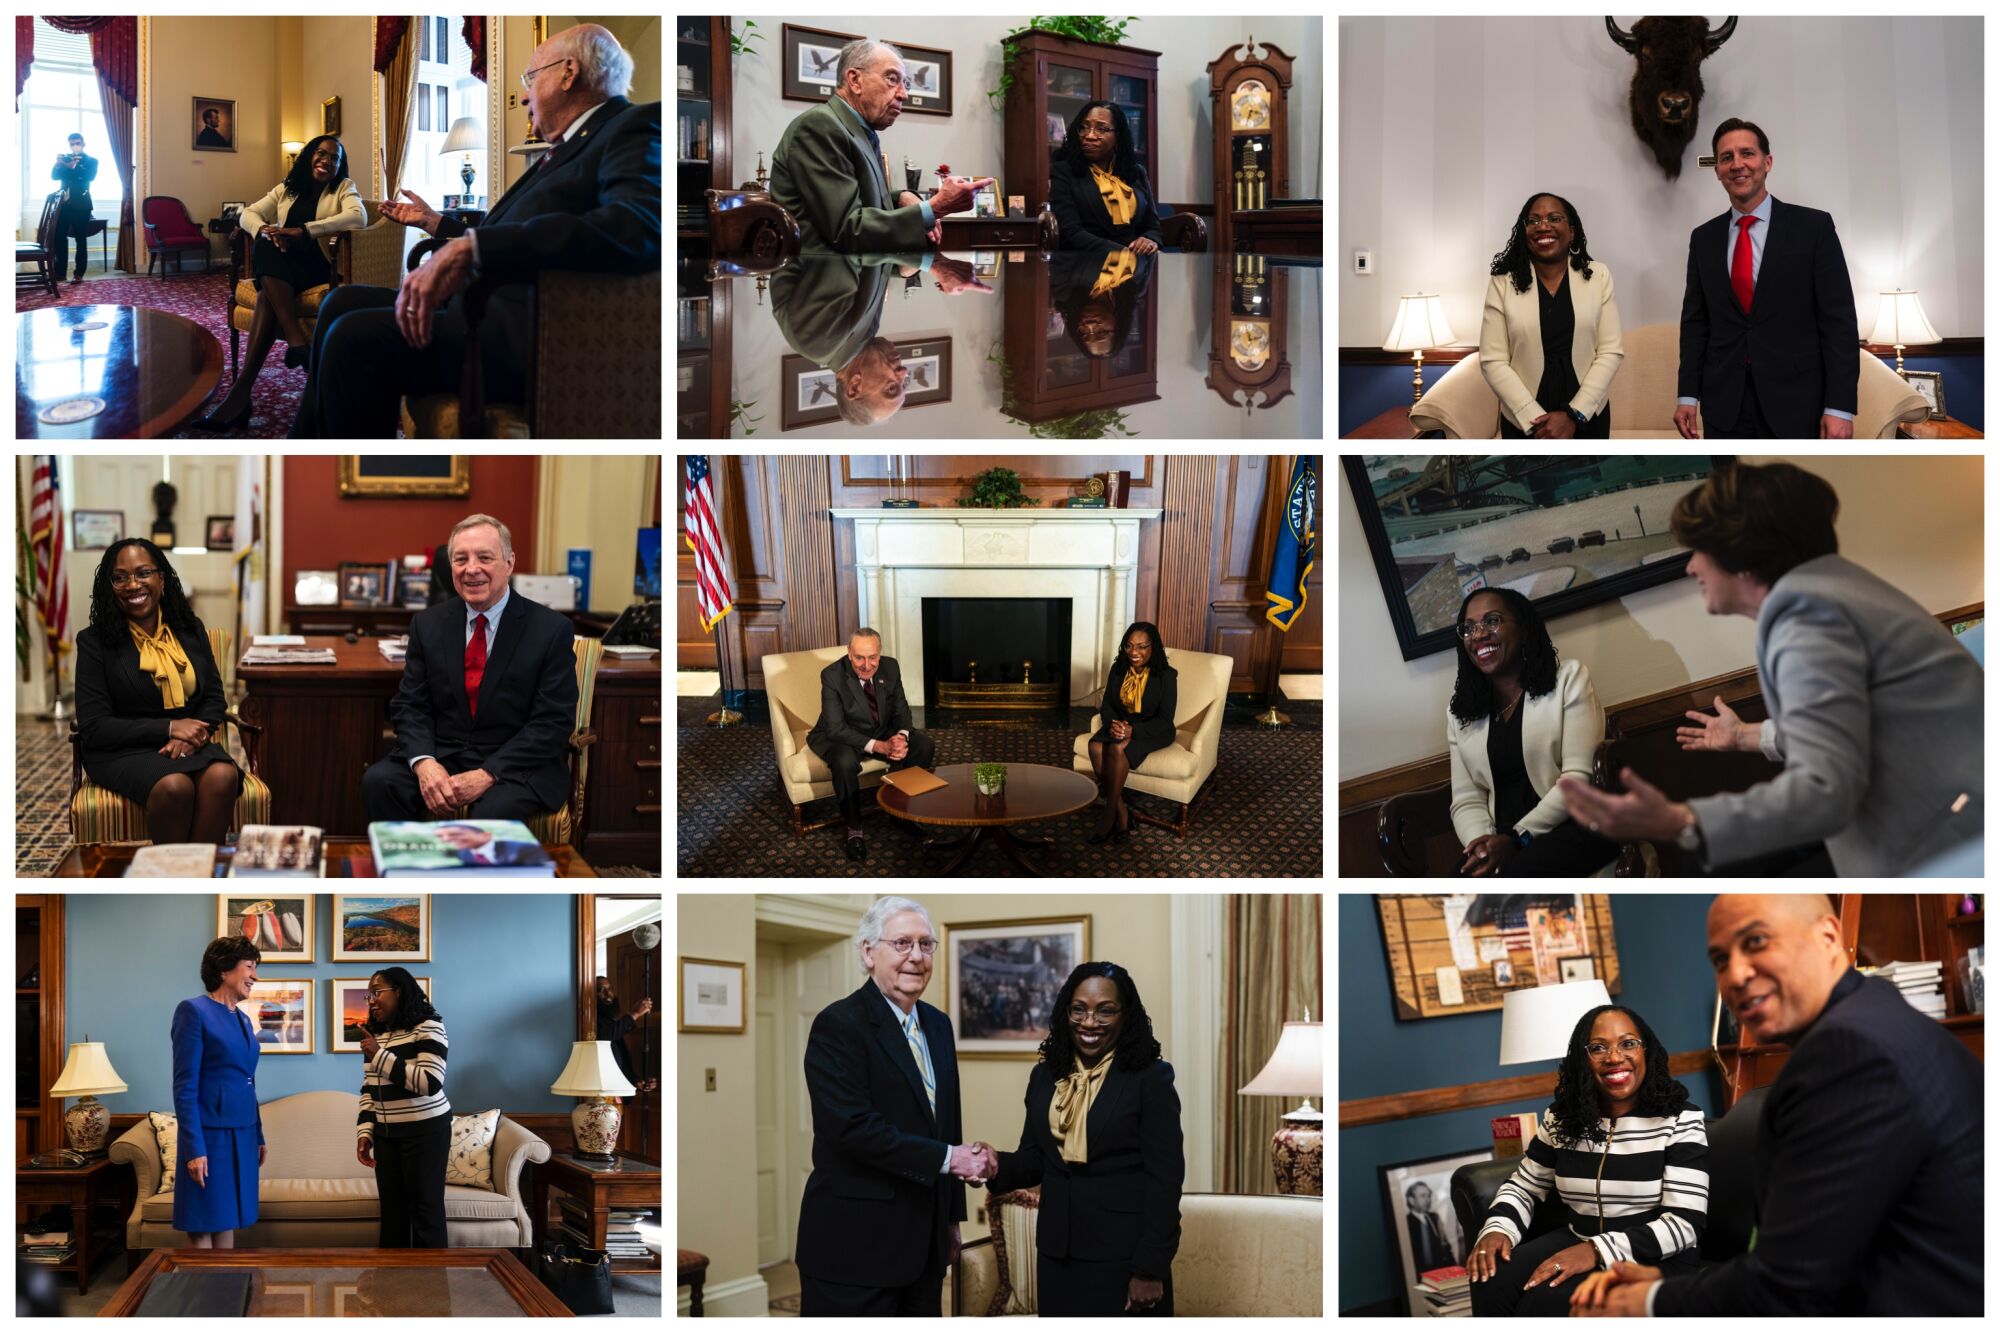 Judge Ketanji Brown Jackson is shown meeting with U.S. senators in nine photographs.